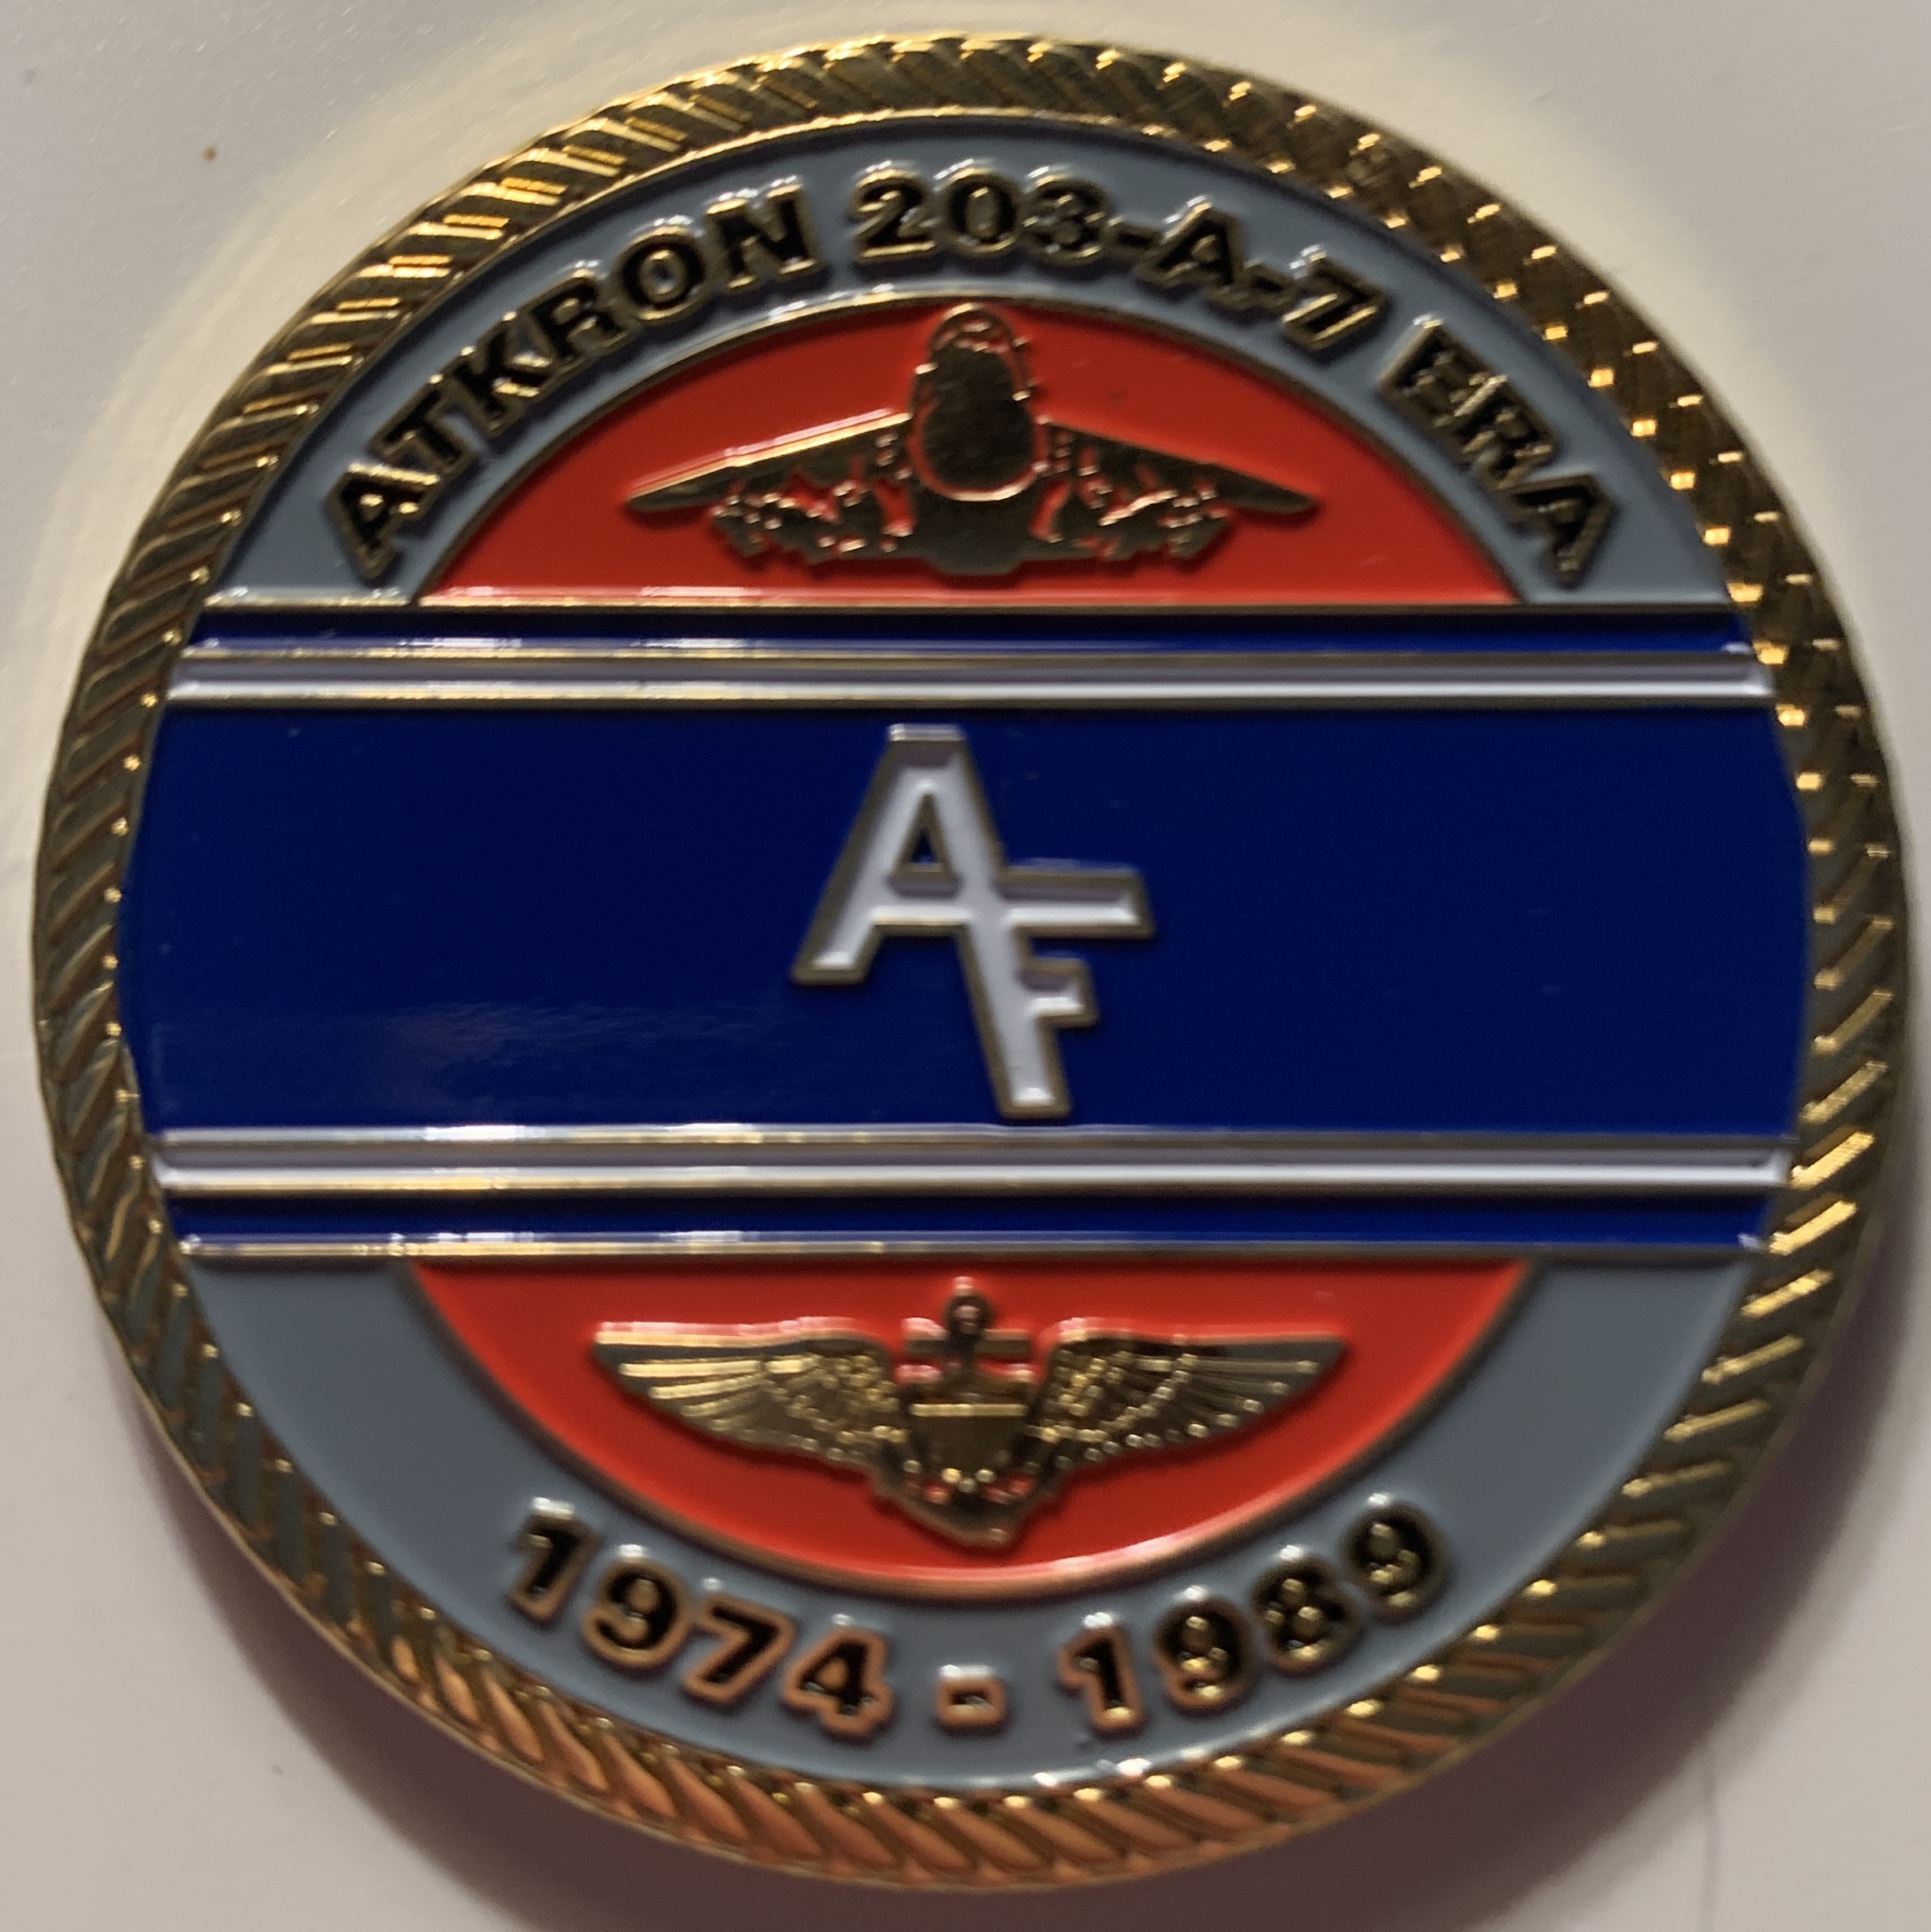 A-7E / VA-203 'BLUE DOLPHINS' Coin (Back)